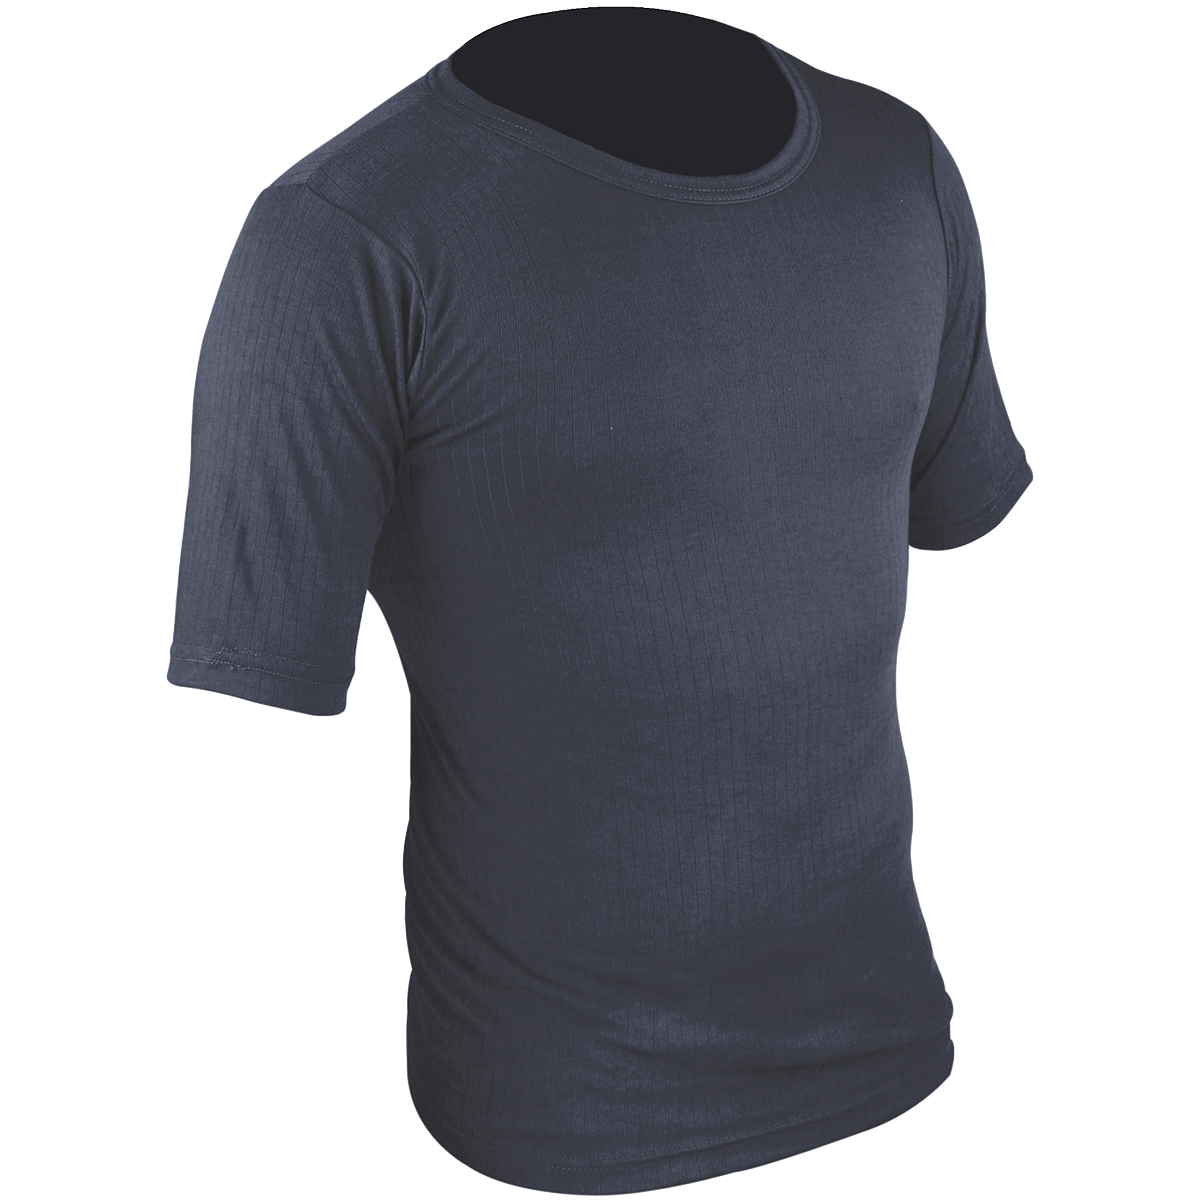 Ladies Thermal Wear Short Sleeve T Shirt Polyviscose Range (British Made)